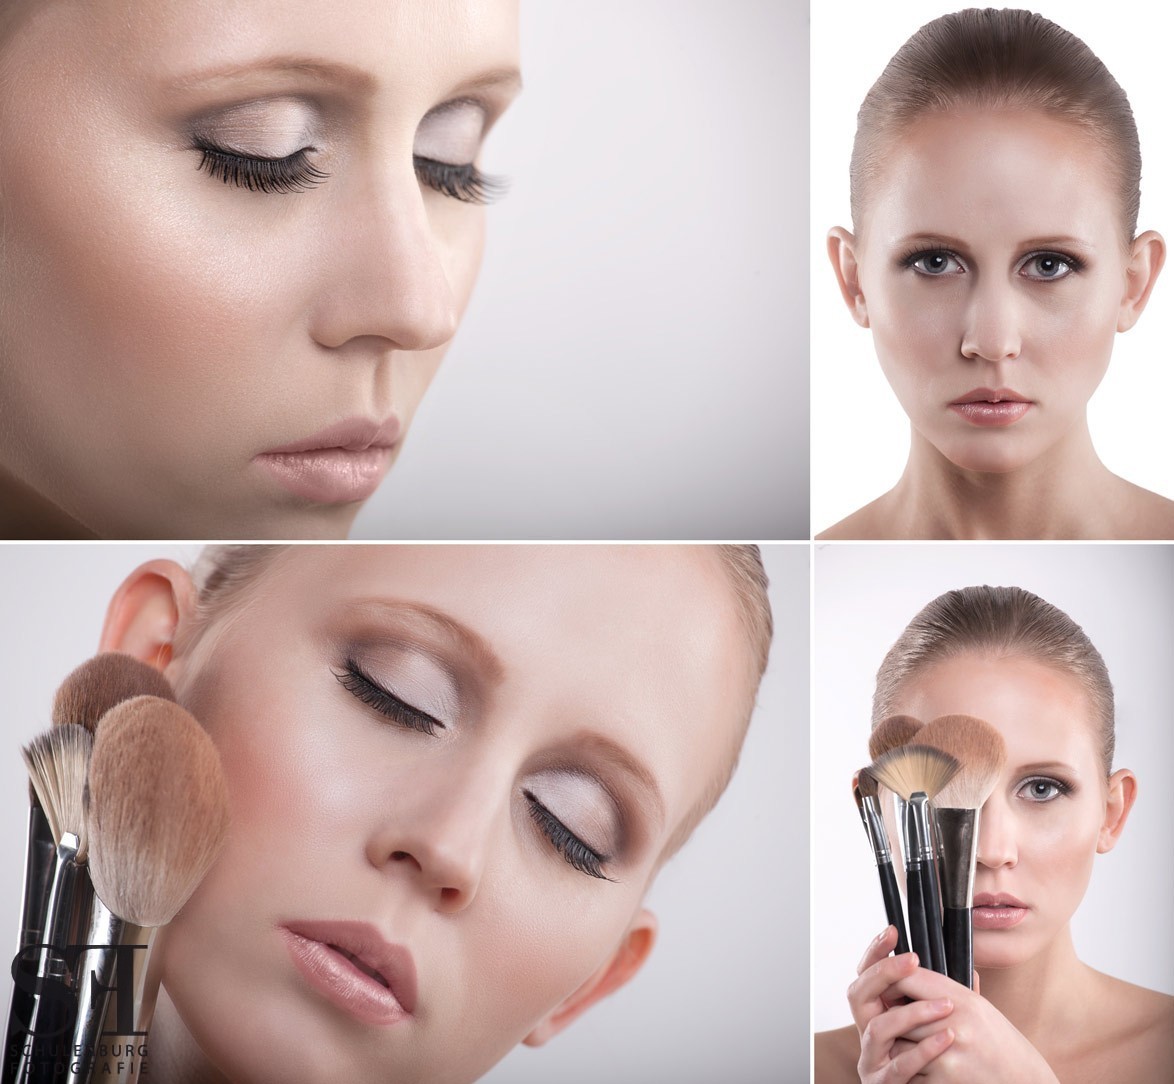 Fotograf: Henry Schulenburg, Hair & Make-up: Anja Rühl, Model: Anne Ludwig